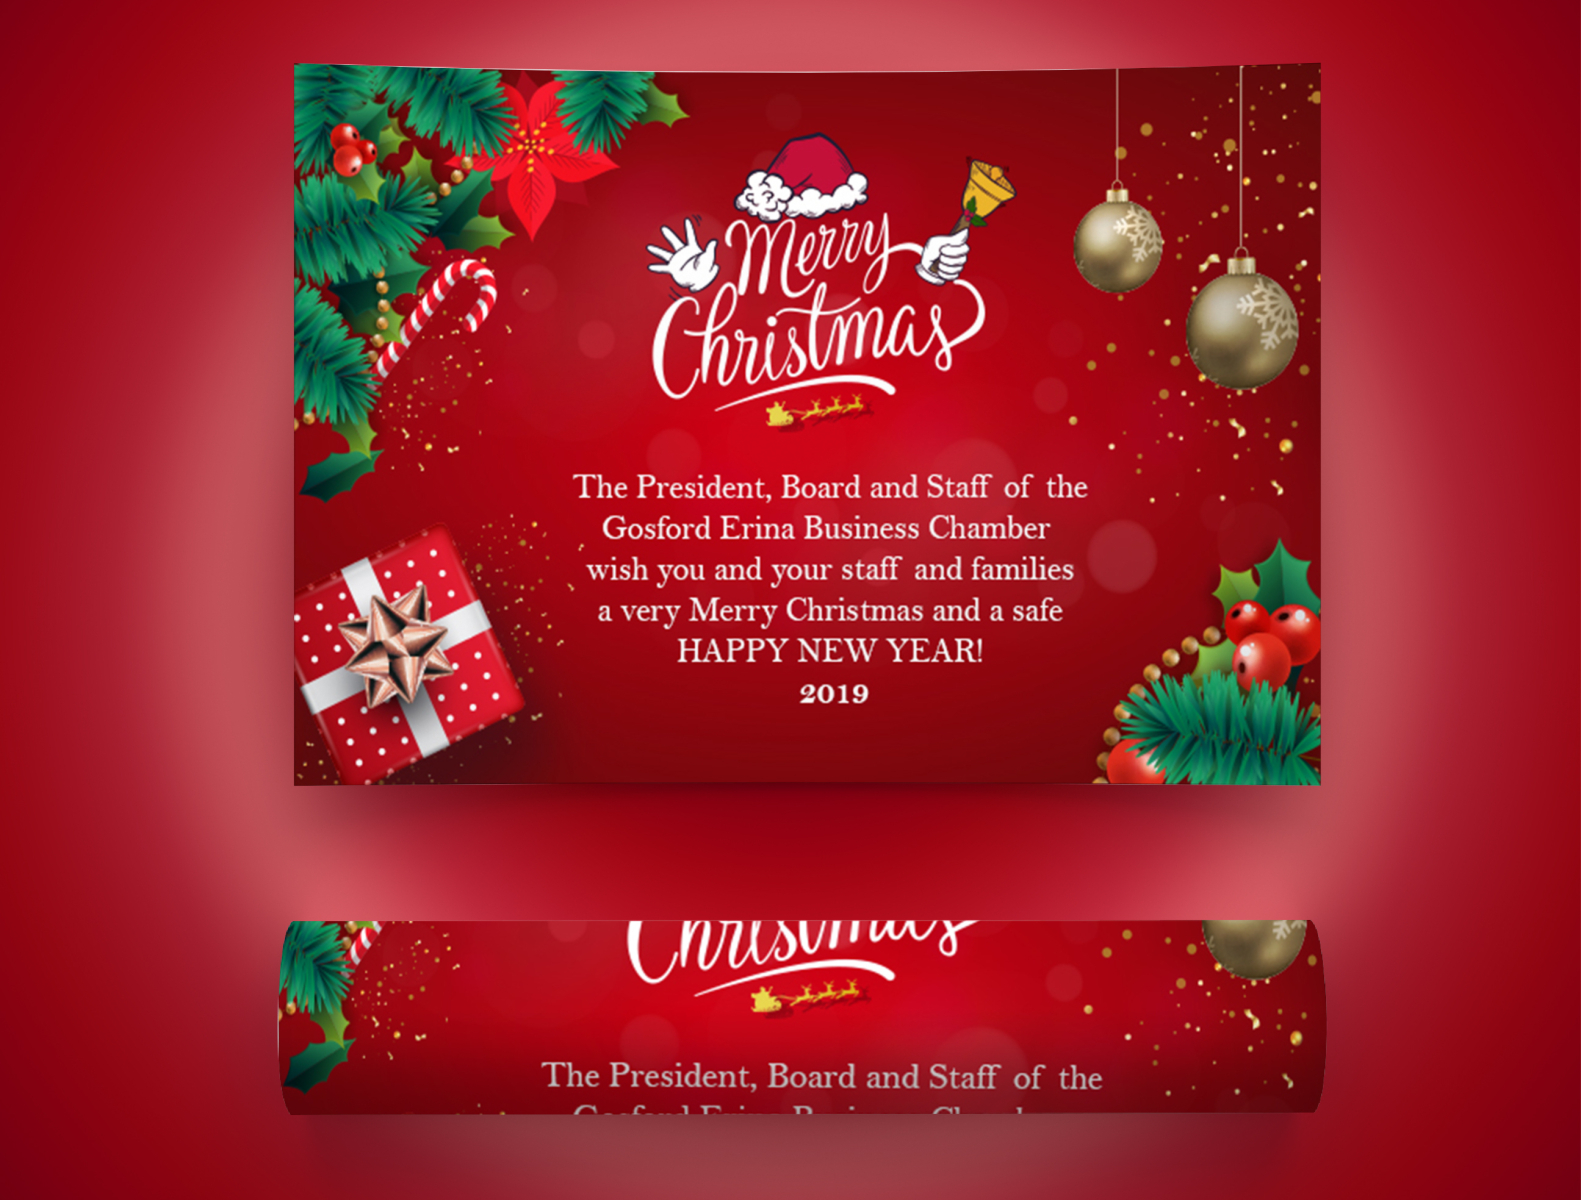 Merry Christmas card Design by Adobefaysal on Dribbble